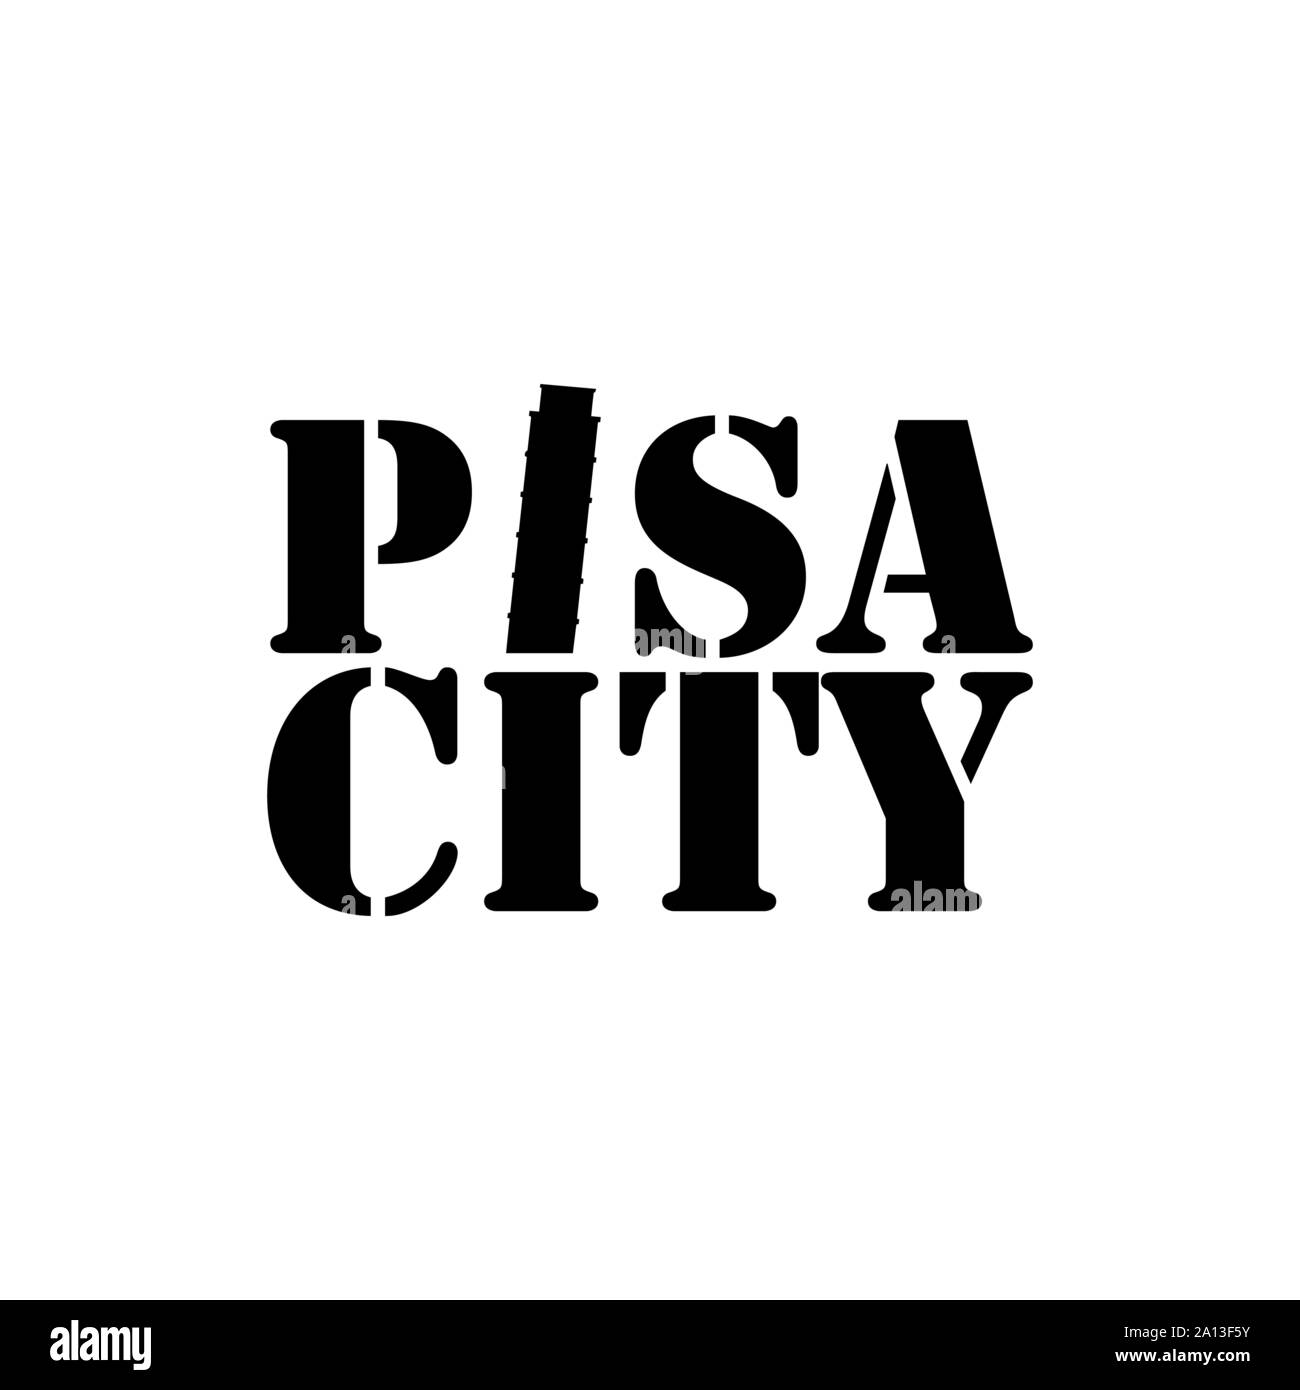 Pisa Stadt schrift Typografie mit Pisa Tower in negativen Raum Stil Design Vector Stock Vektor